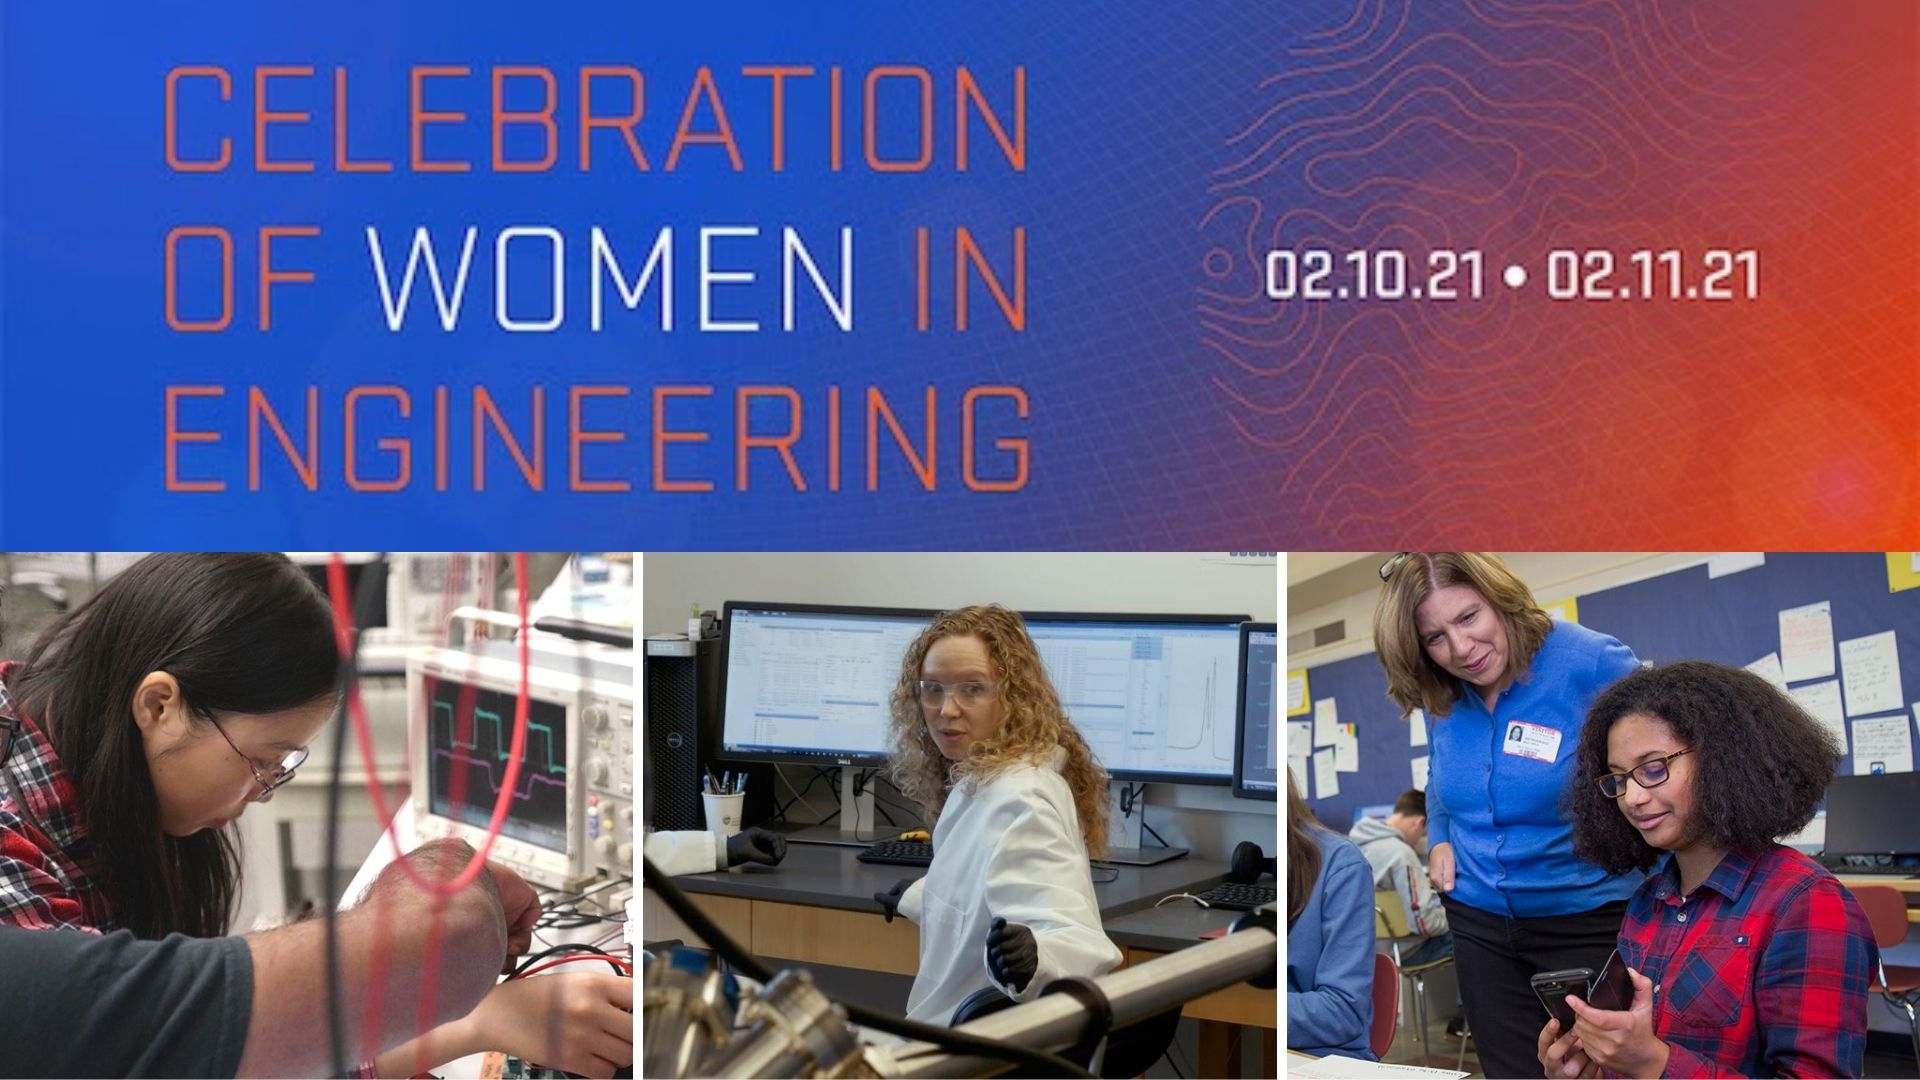 Women in Engineering event graphic